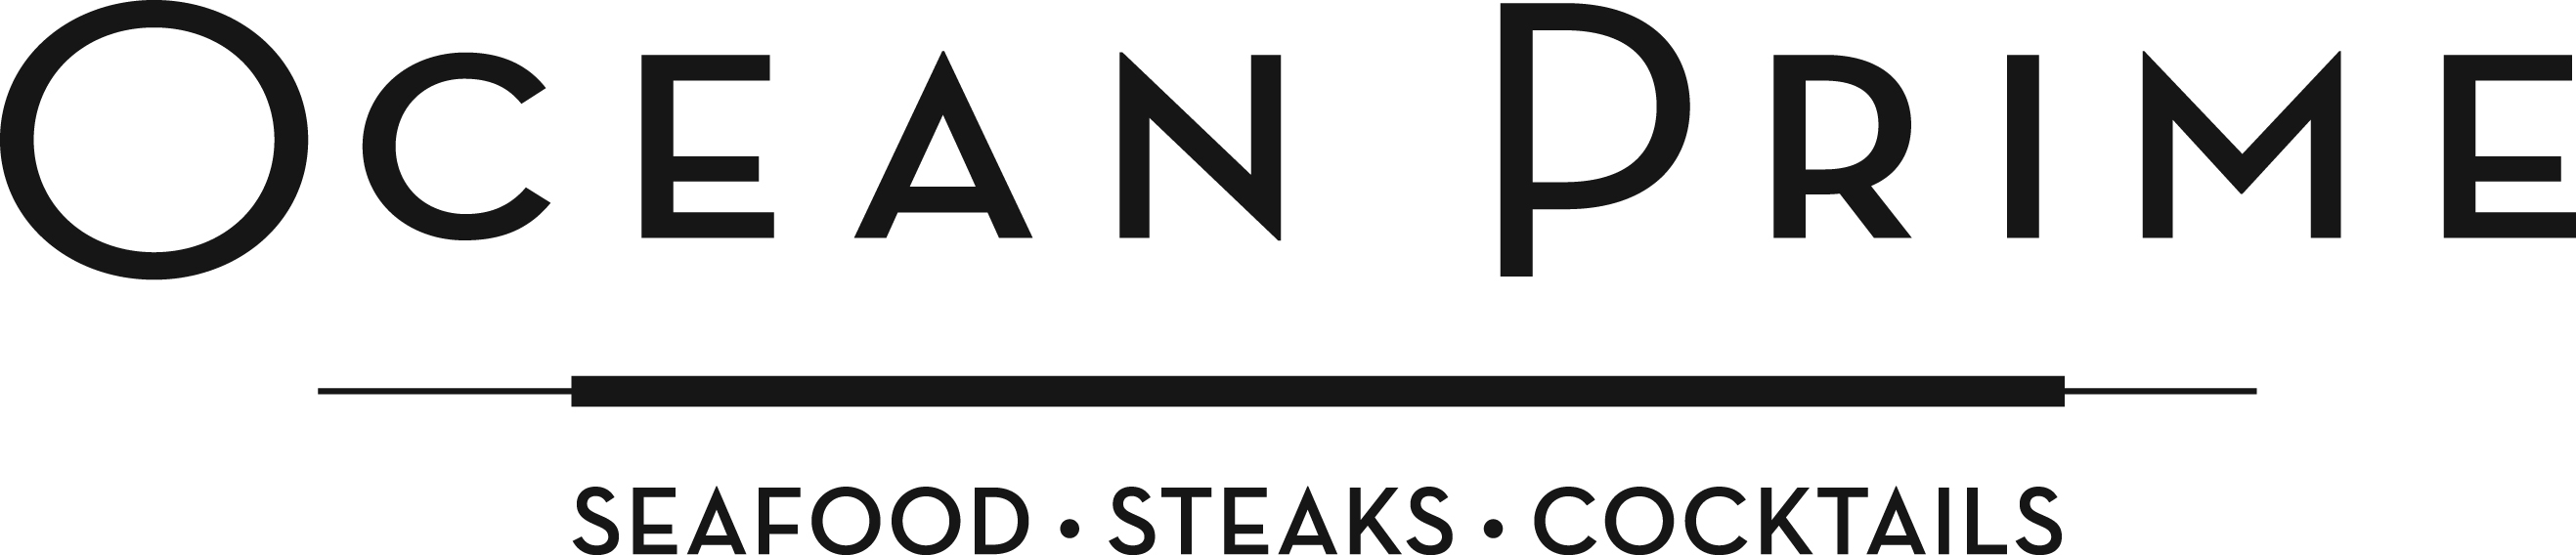 Ocean Prime – Seafood, Steaks, Cocktails